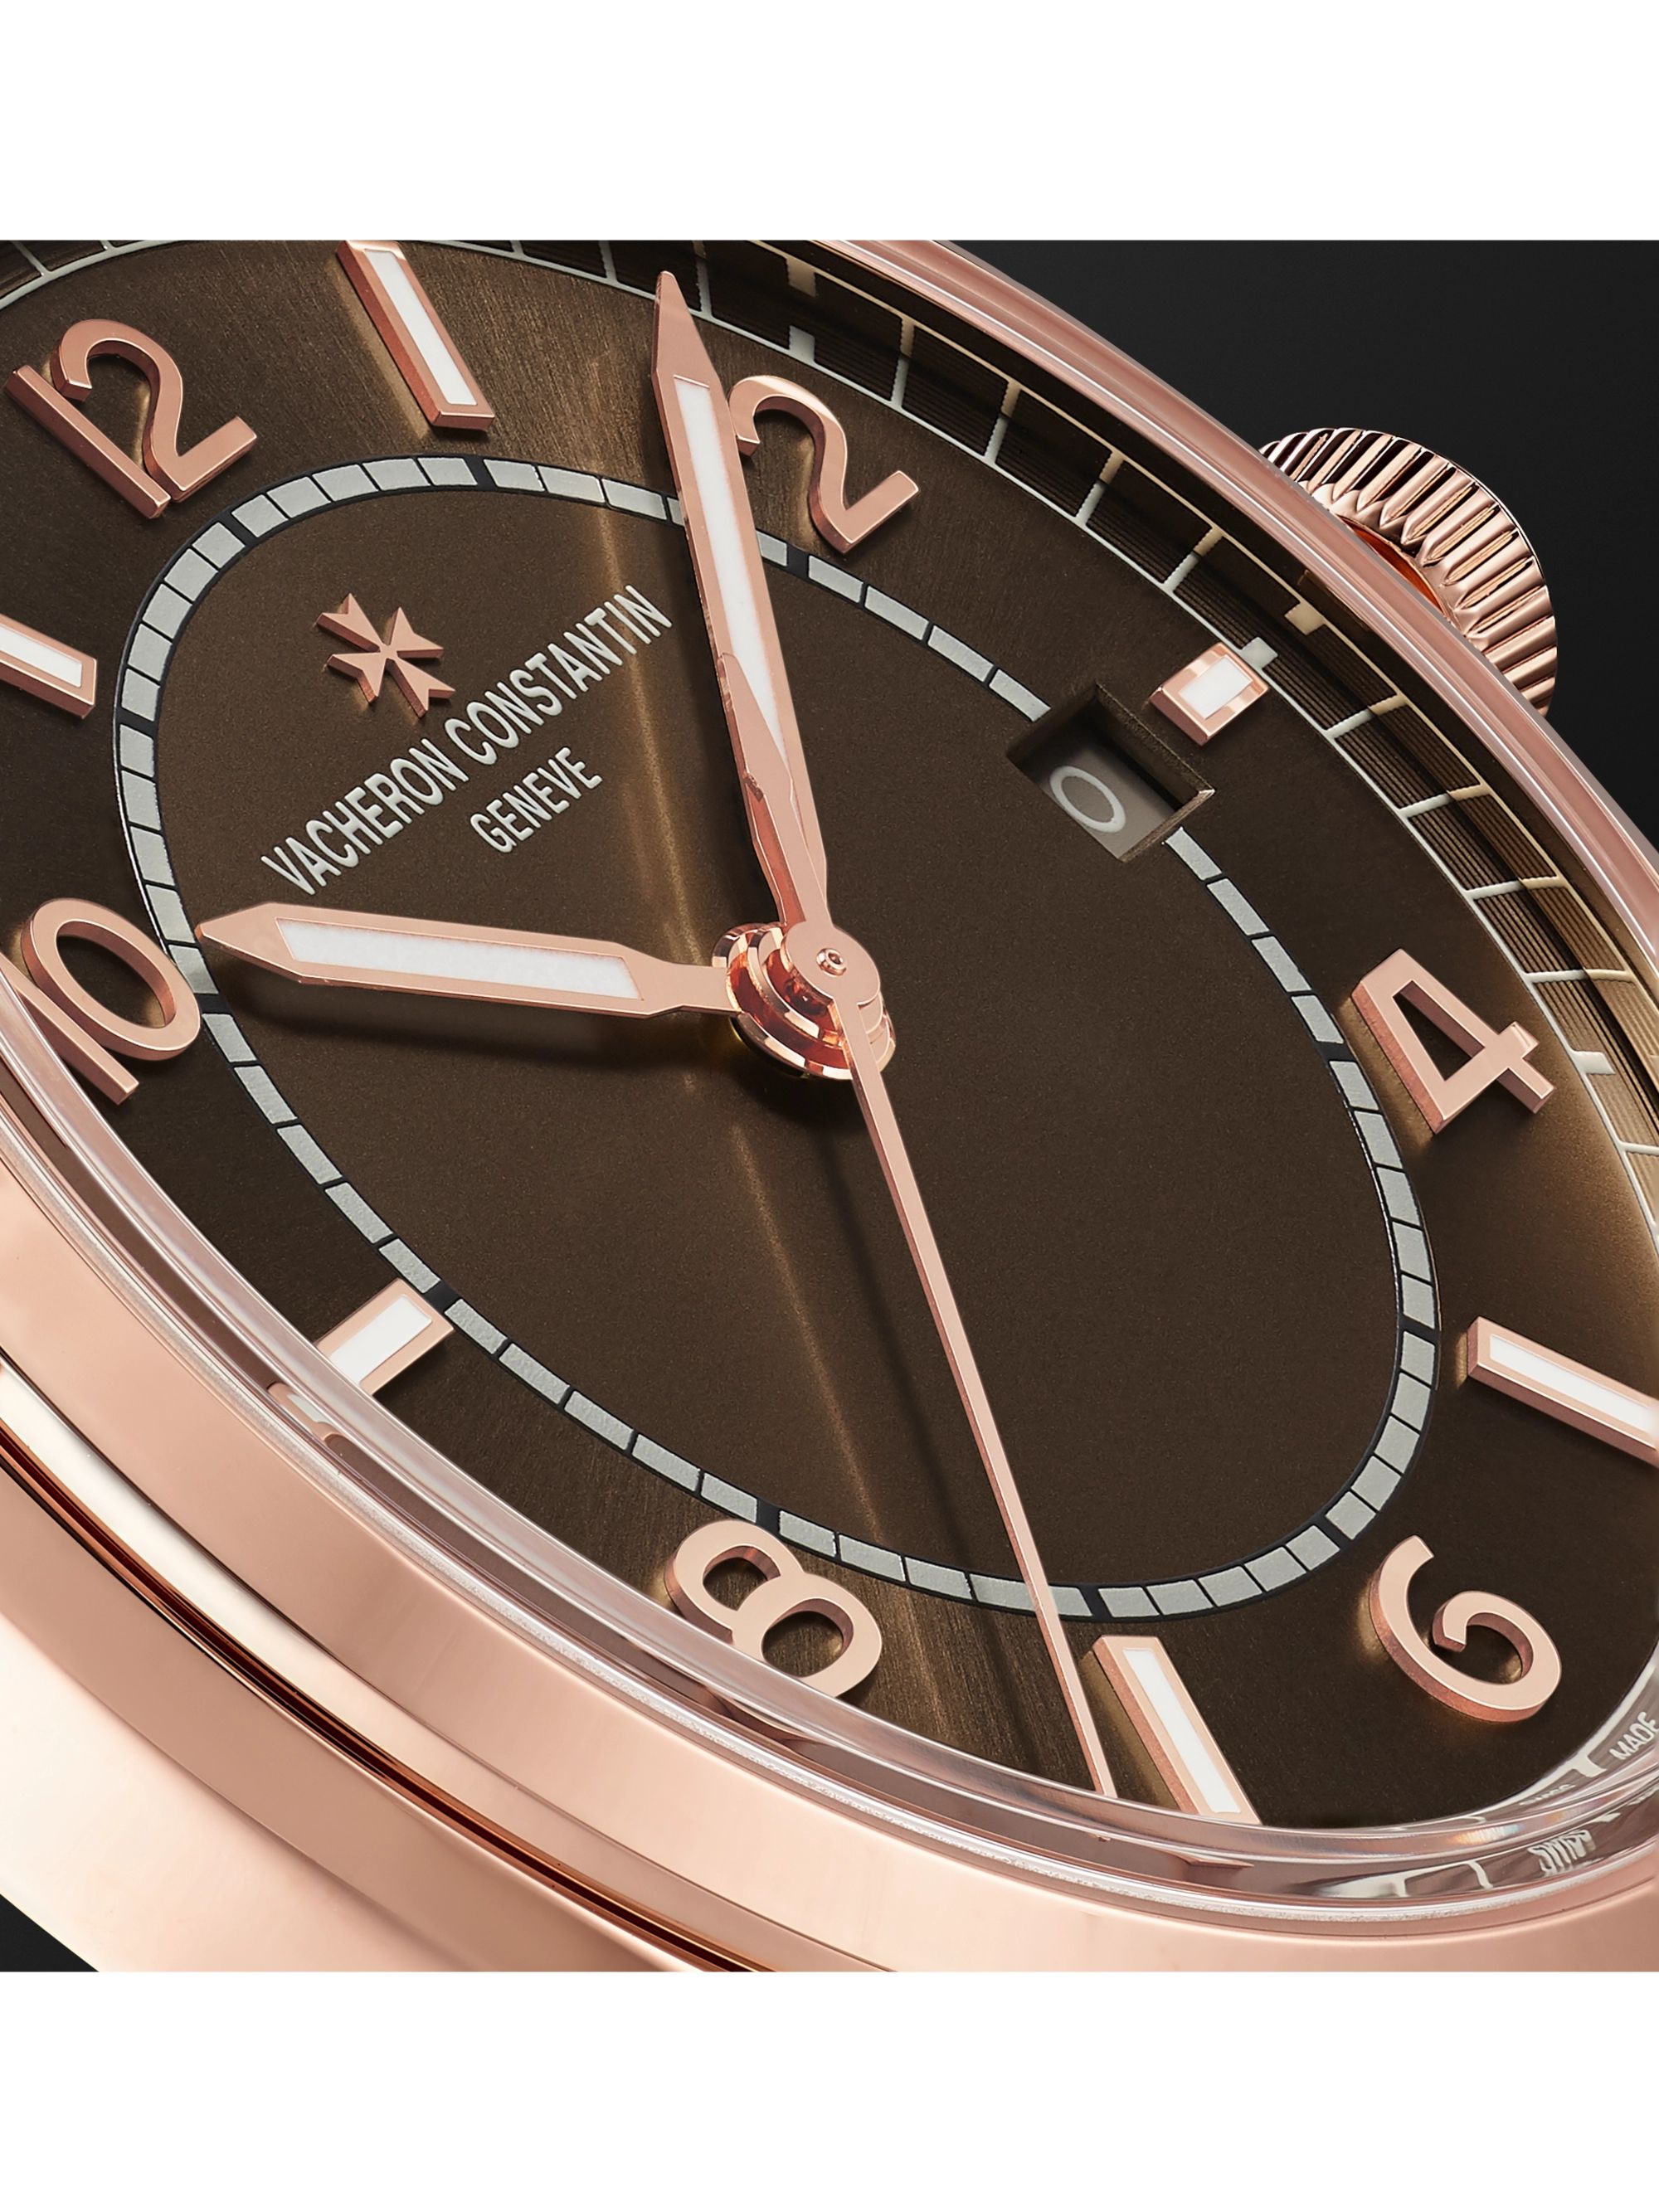 VACHERON CONSTANTIN Fiftysix Automatic 40mm 18-Karat Pink Gold and Leather Watch, Ref. No. 4600E/000R-B576